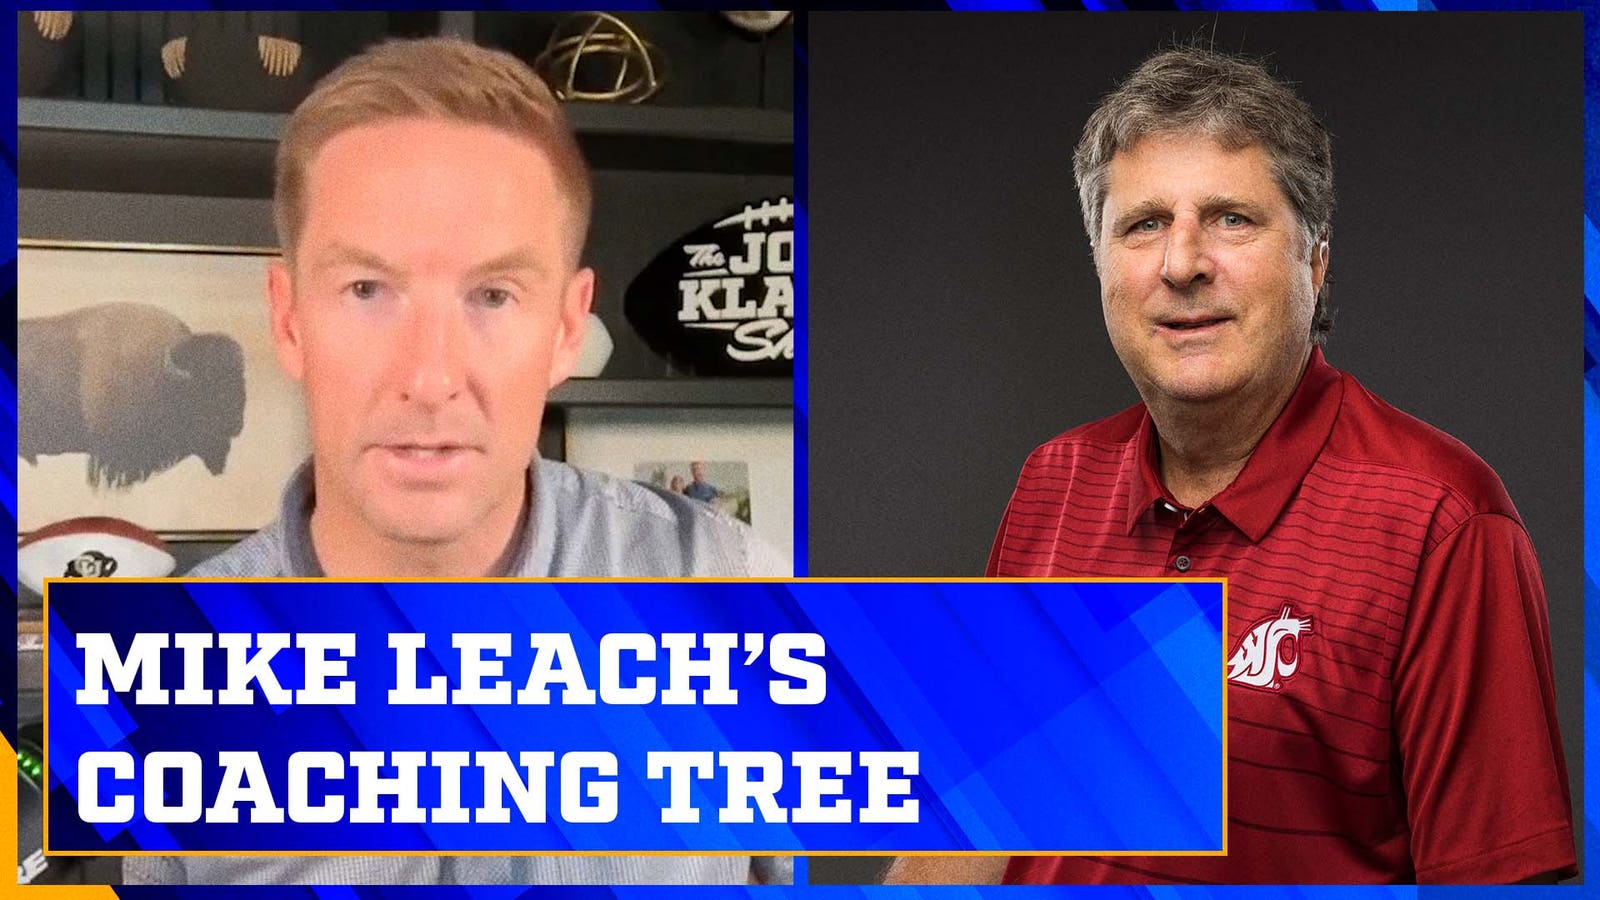 Mike Leach's impactful coaching tree